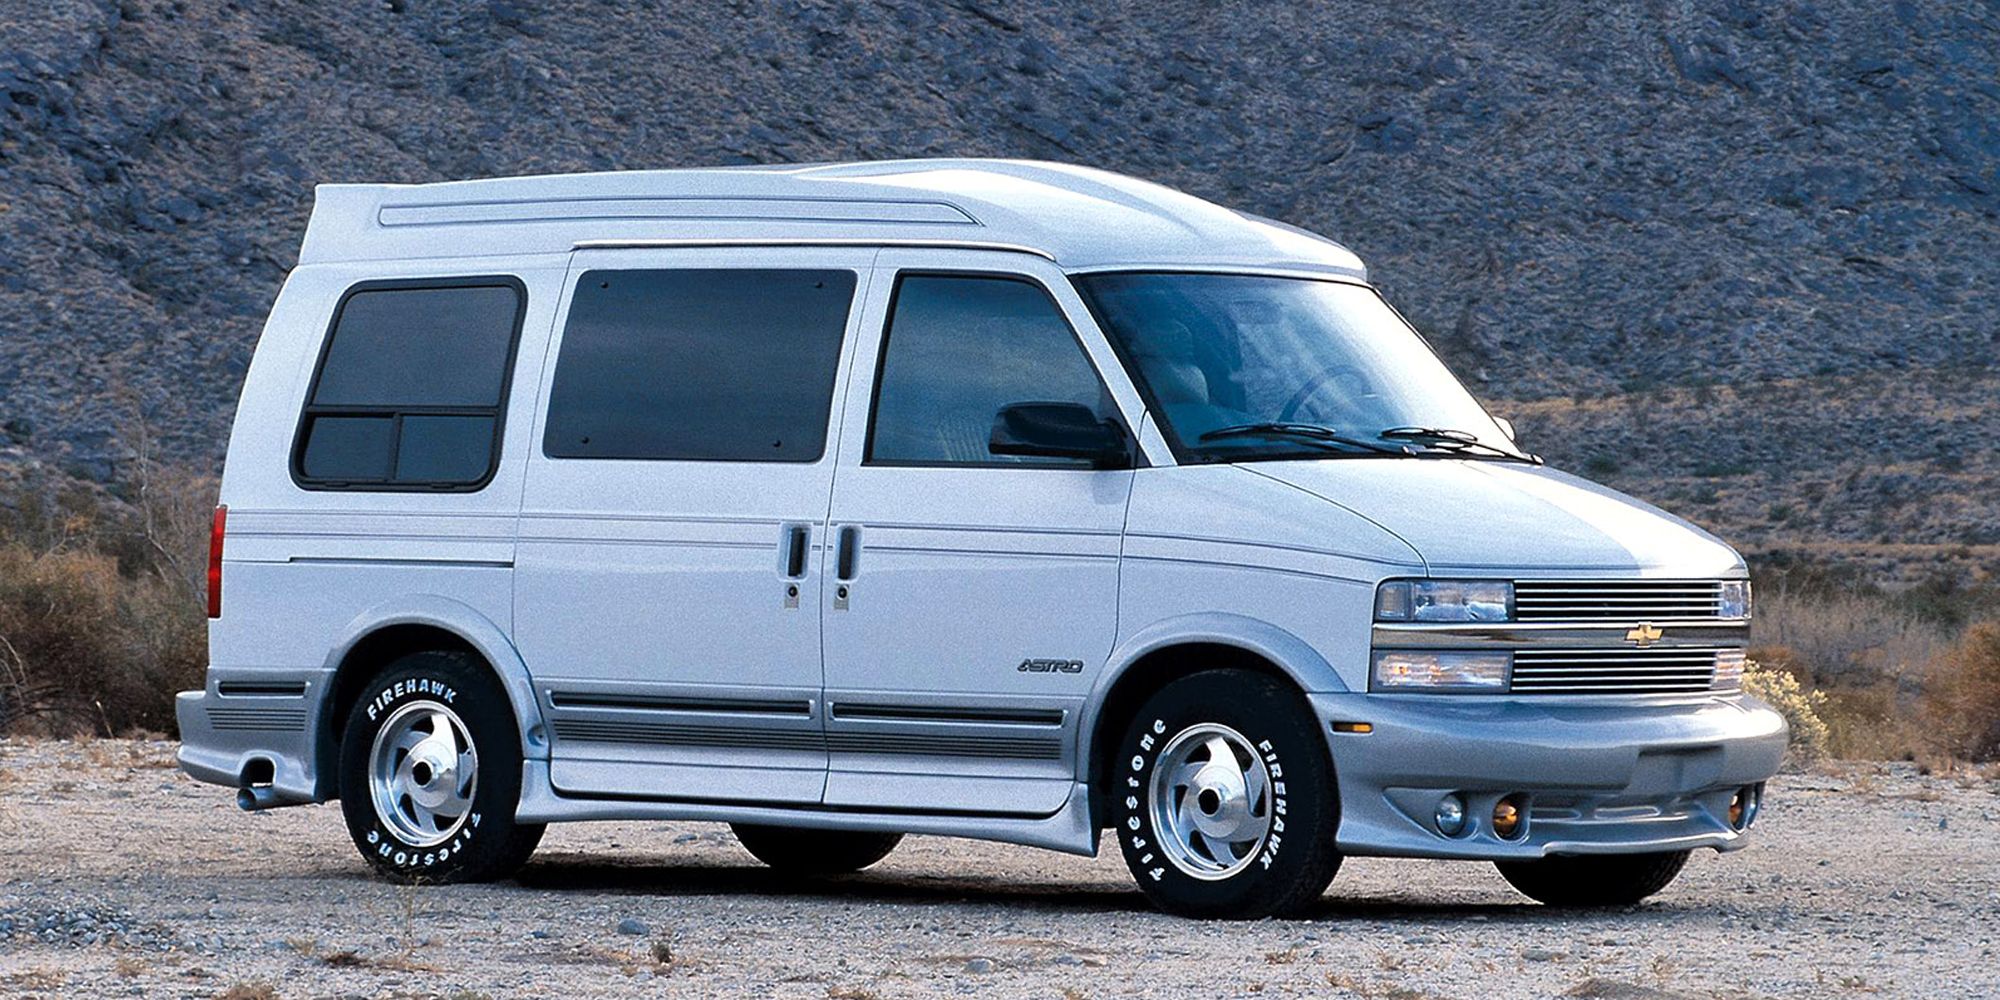 A white Chevy Astro conversion van